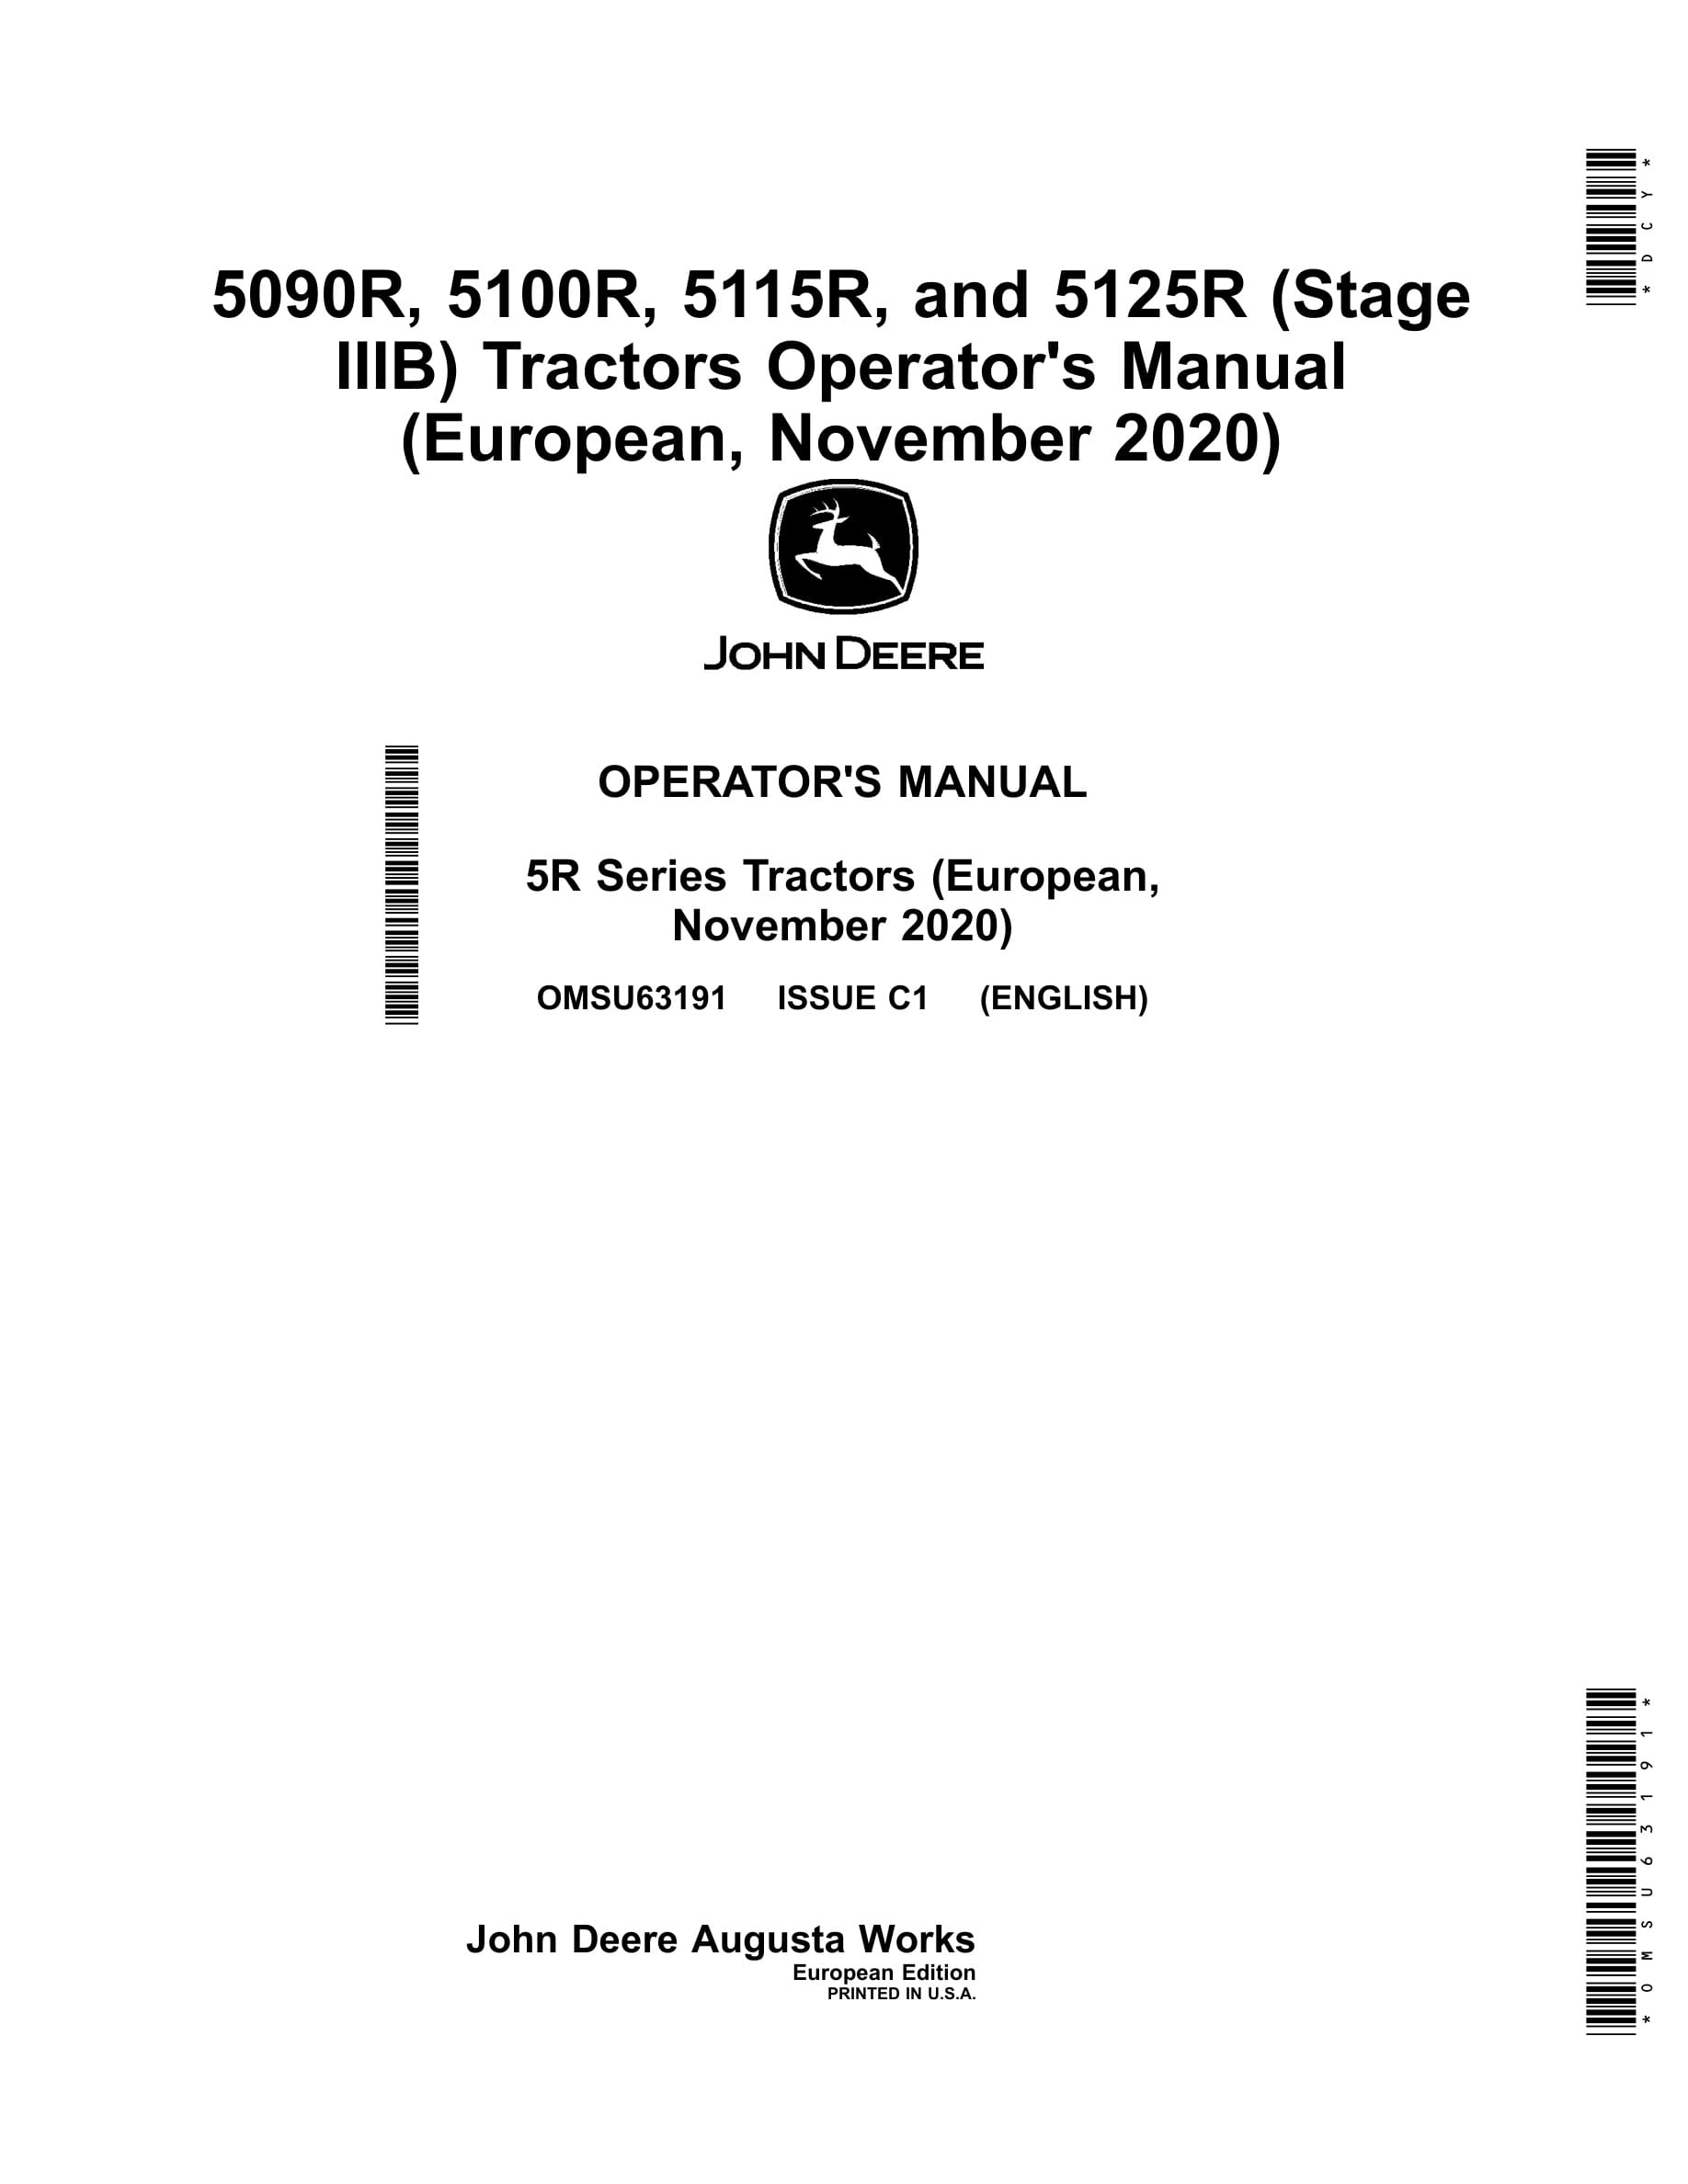 John Deere 5090r, 5100r, 5115r, And 5125r (stage Iiib) Tractors Operator Manuals OMSU63191-1